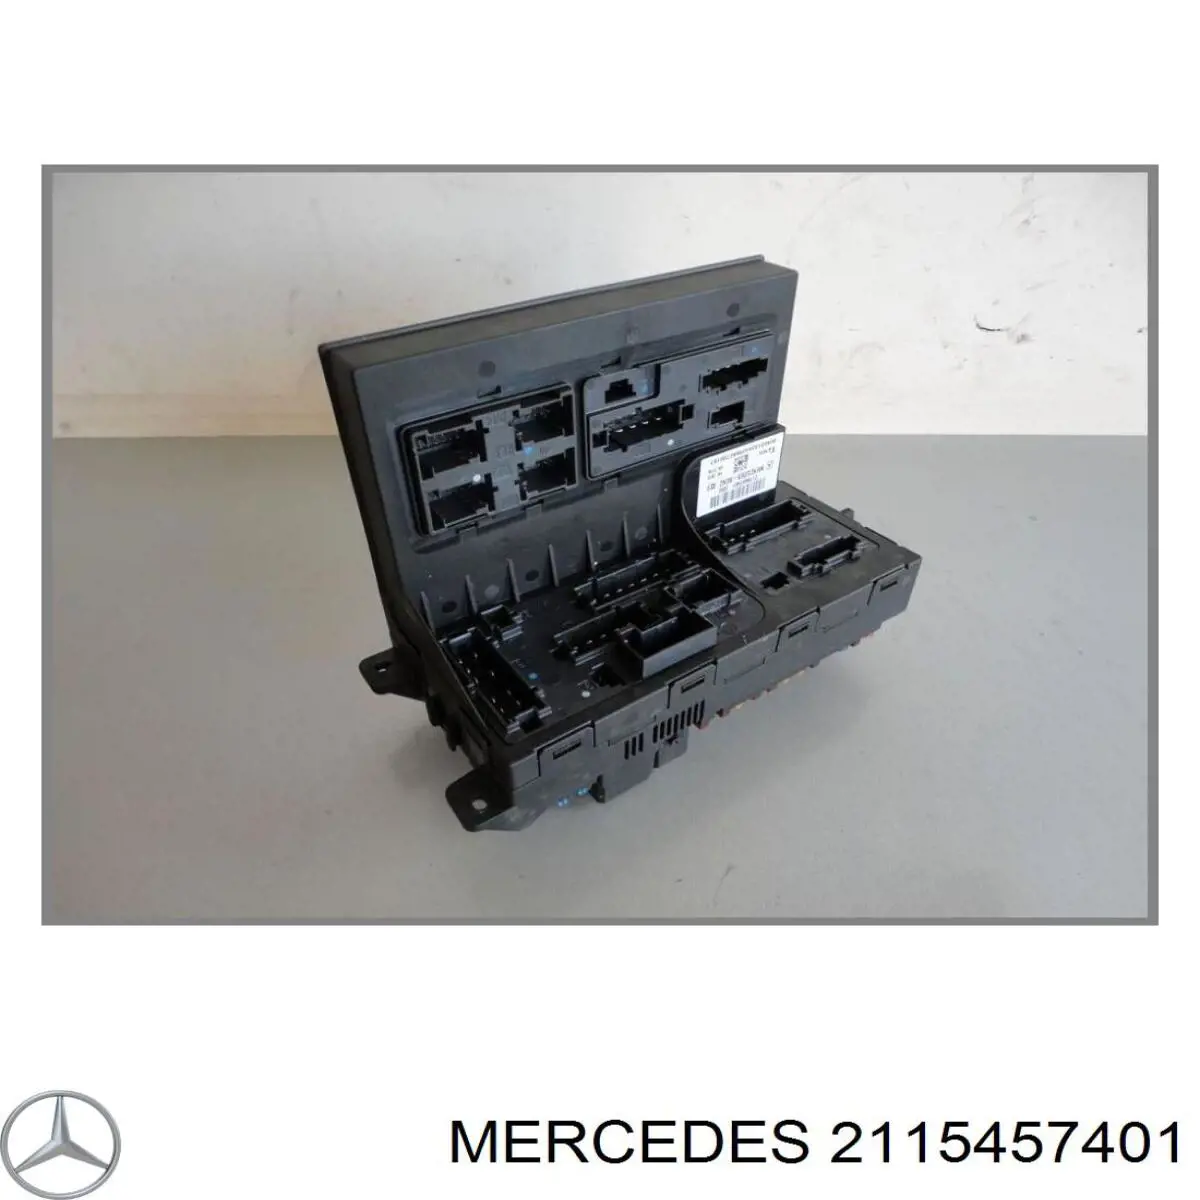 A2115457401 Mercedes 